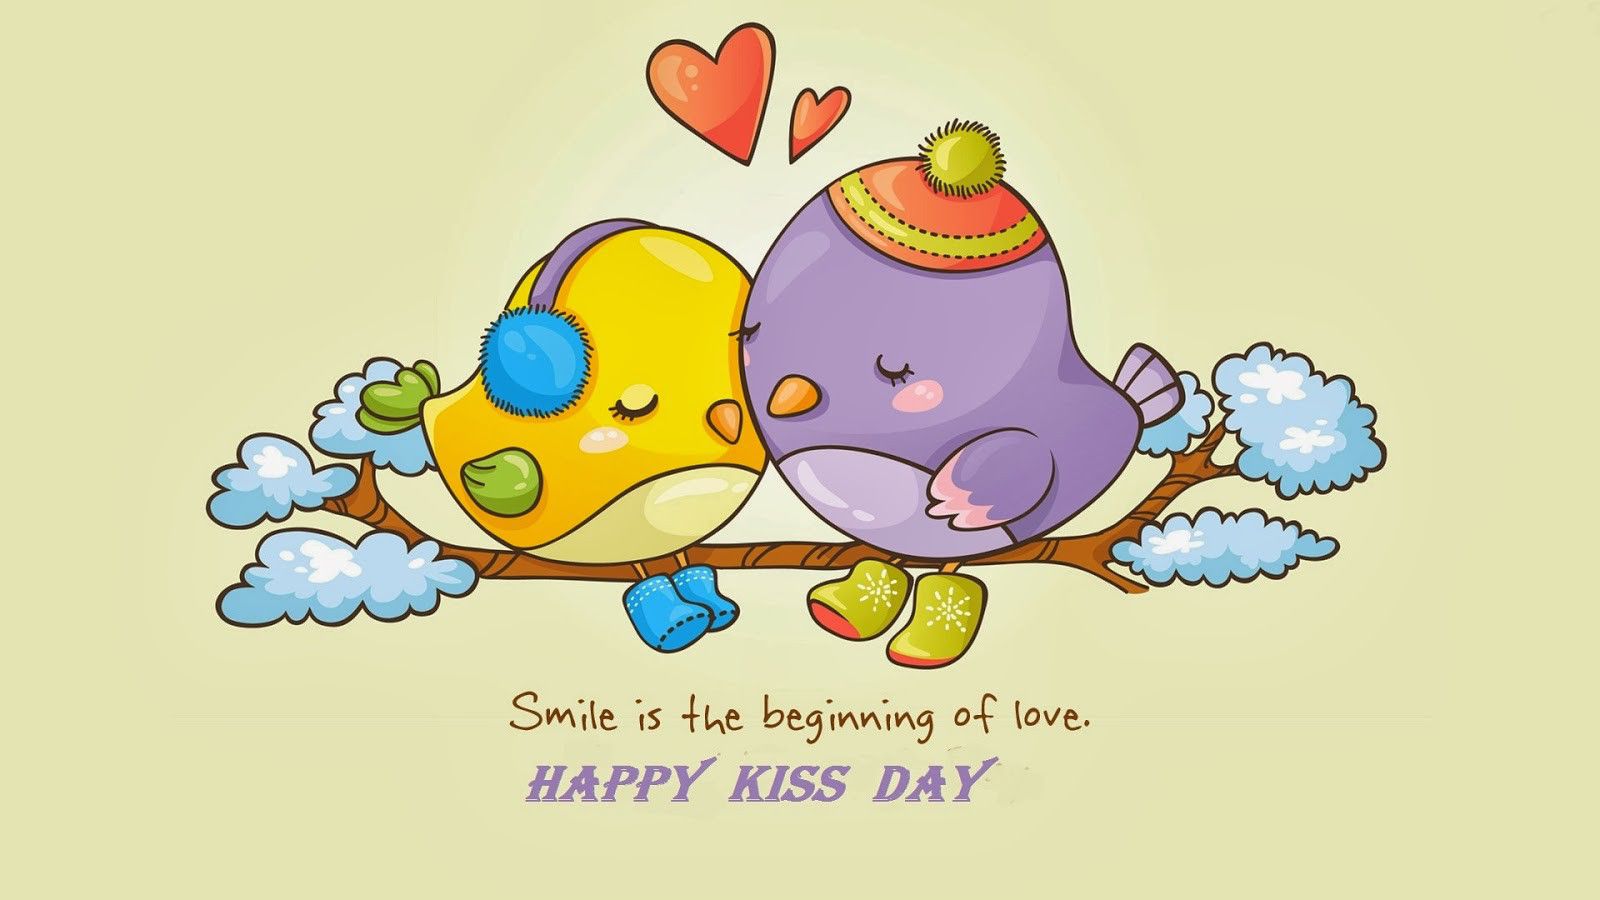 Kiss Day Wallpaper For Mobile Desktop2 Cgfrog Daily Design